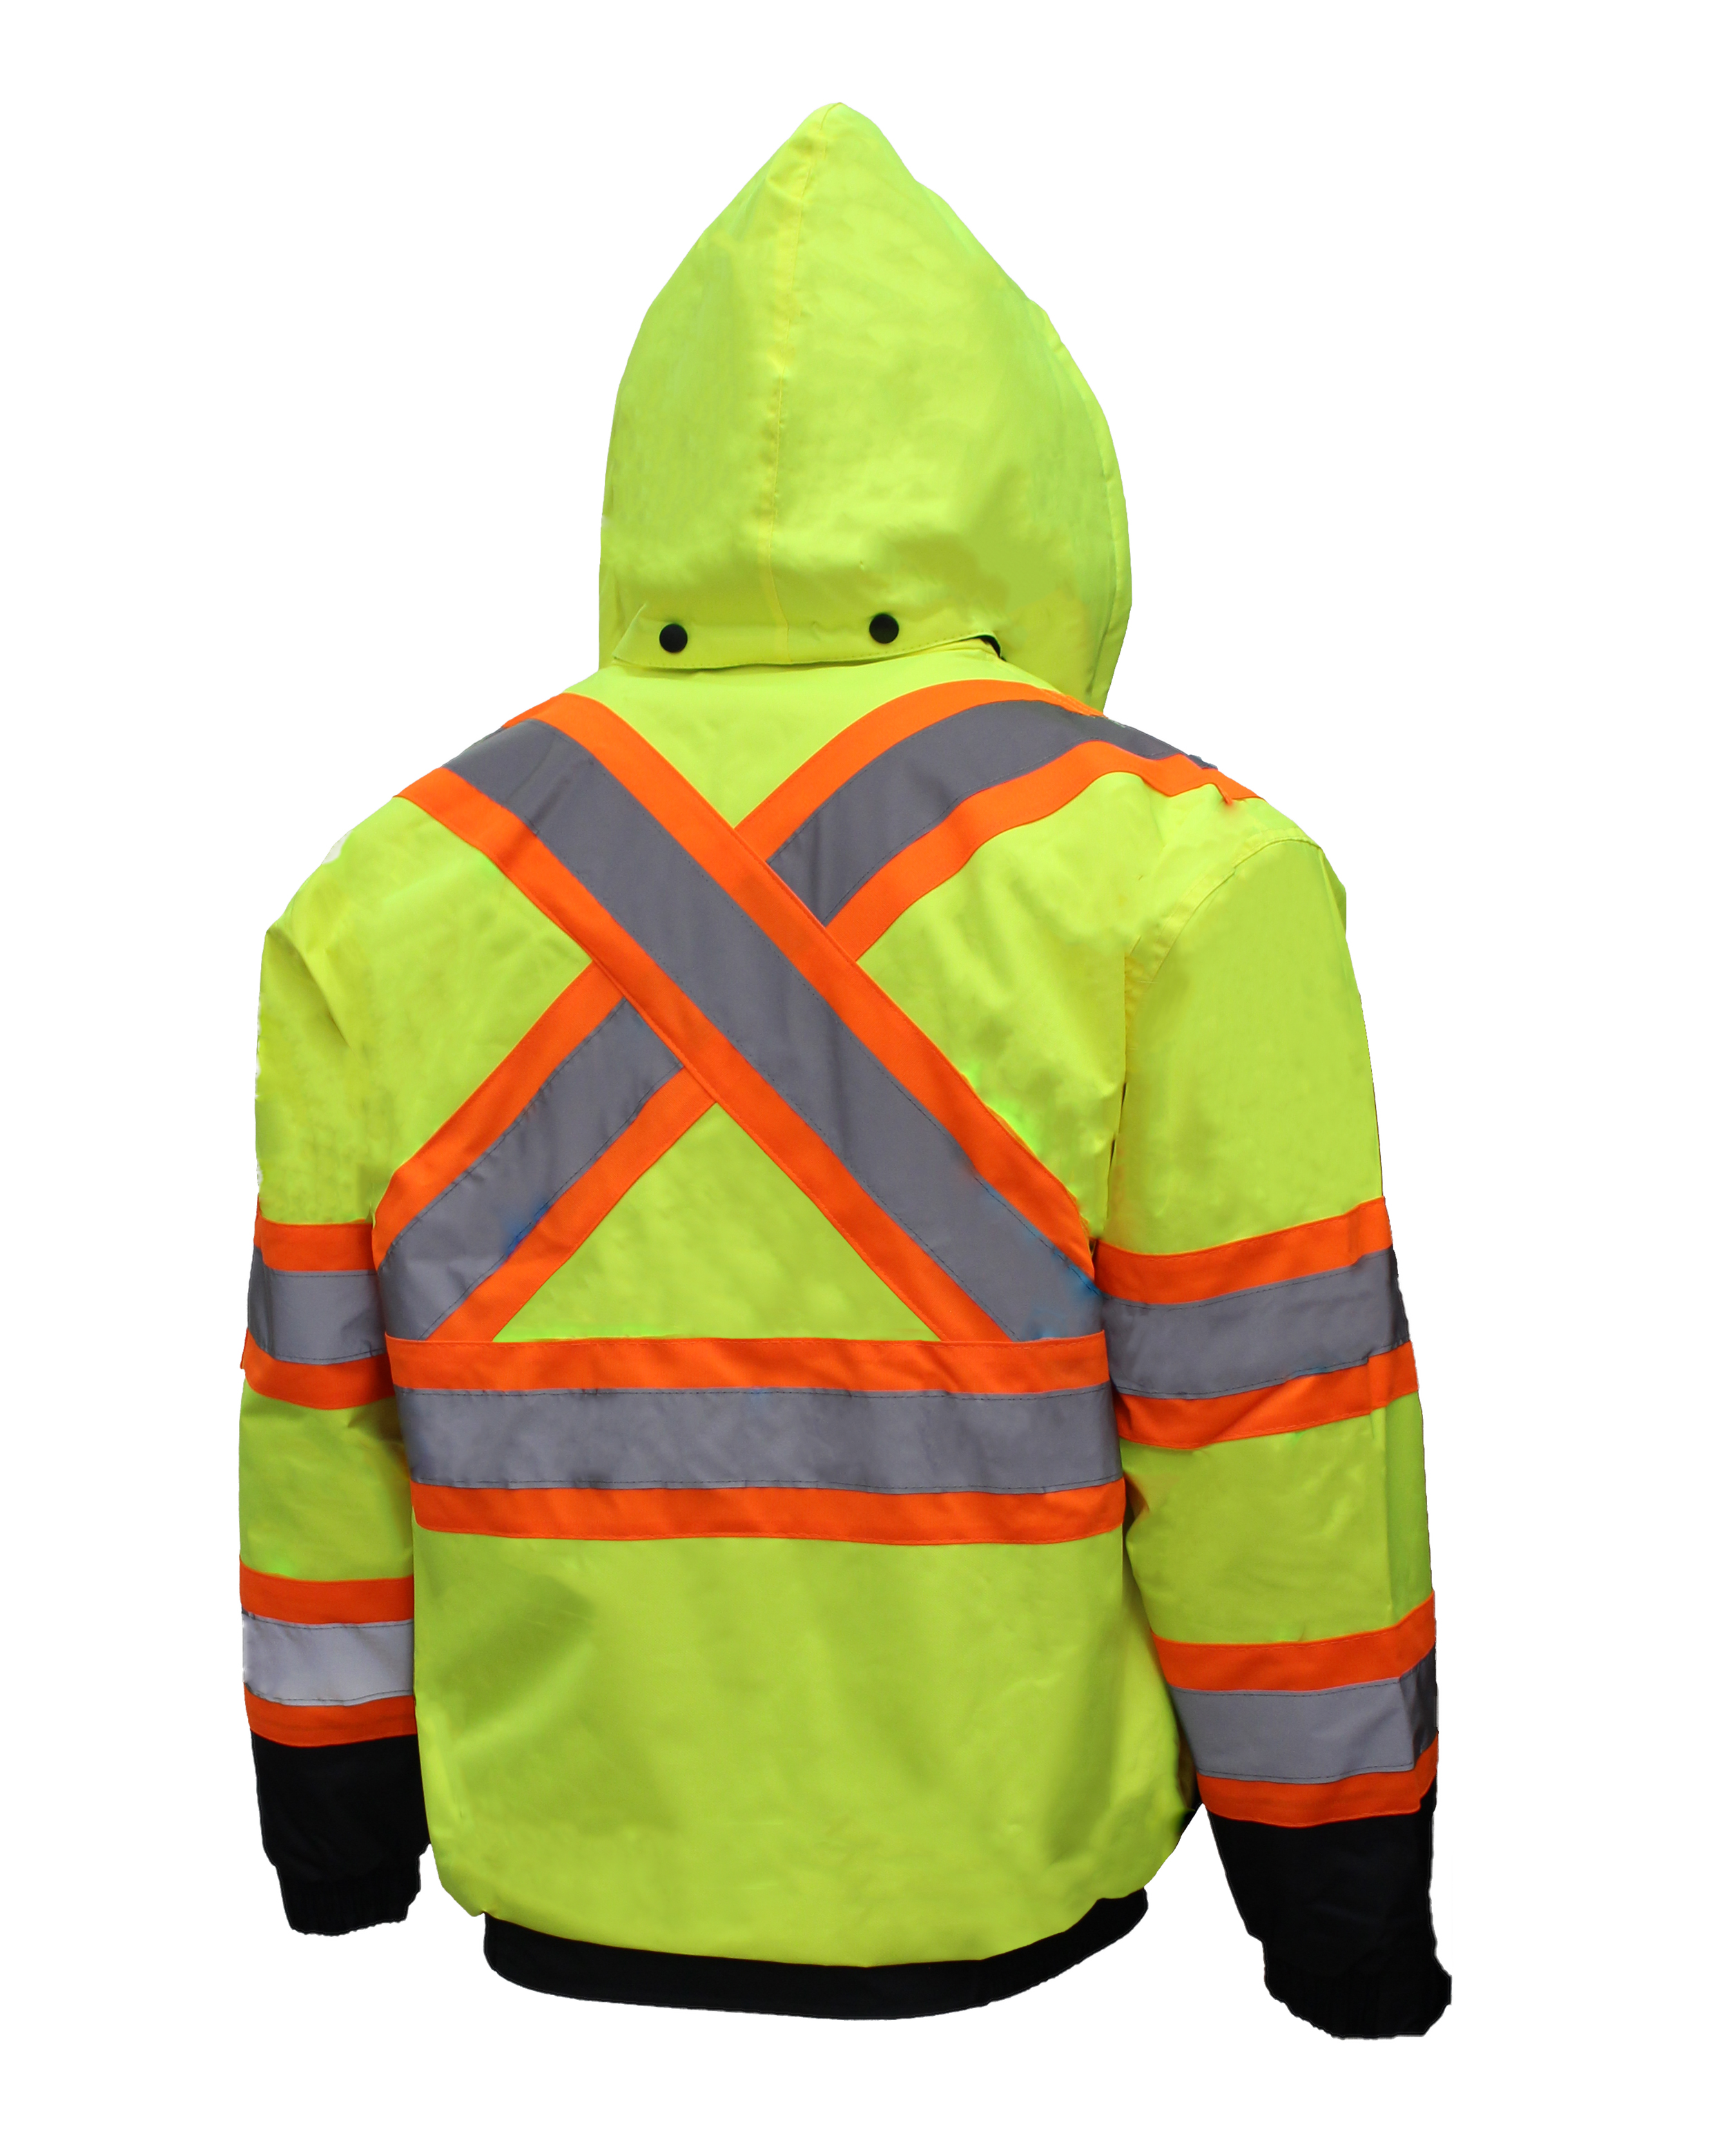 Troy Safety Hi-Viz Workwear, Men's ANSI Class High Visibility Bomber  Safety Jacket with X pattern, Waterproof